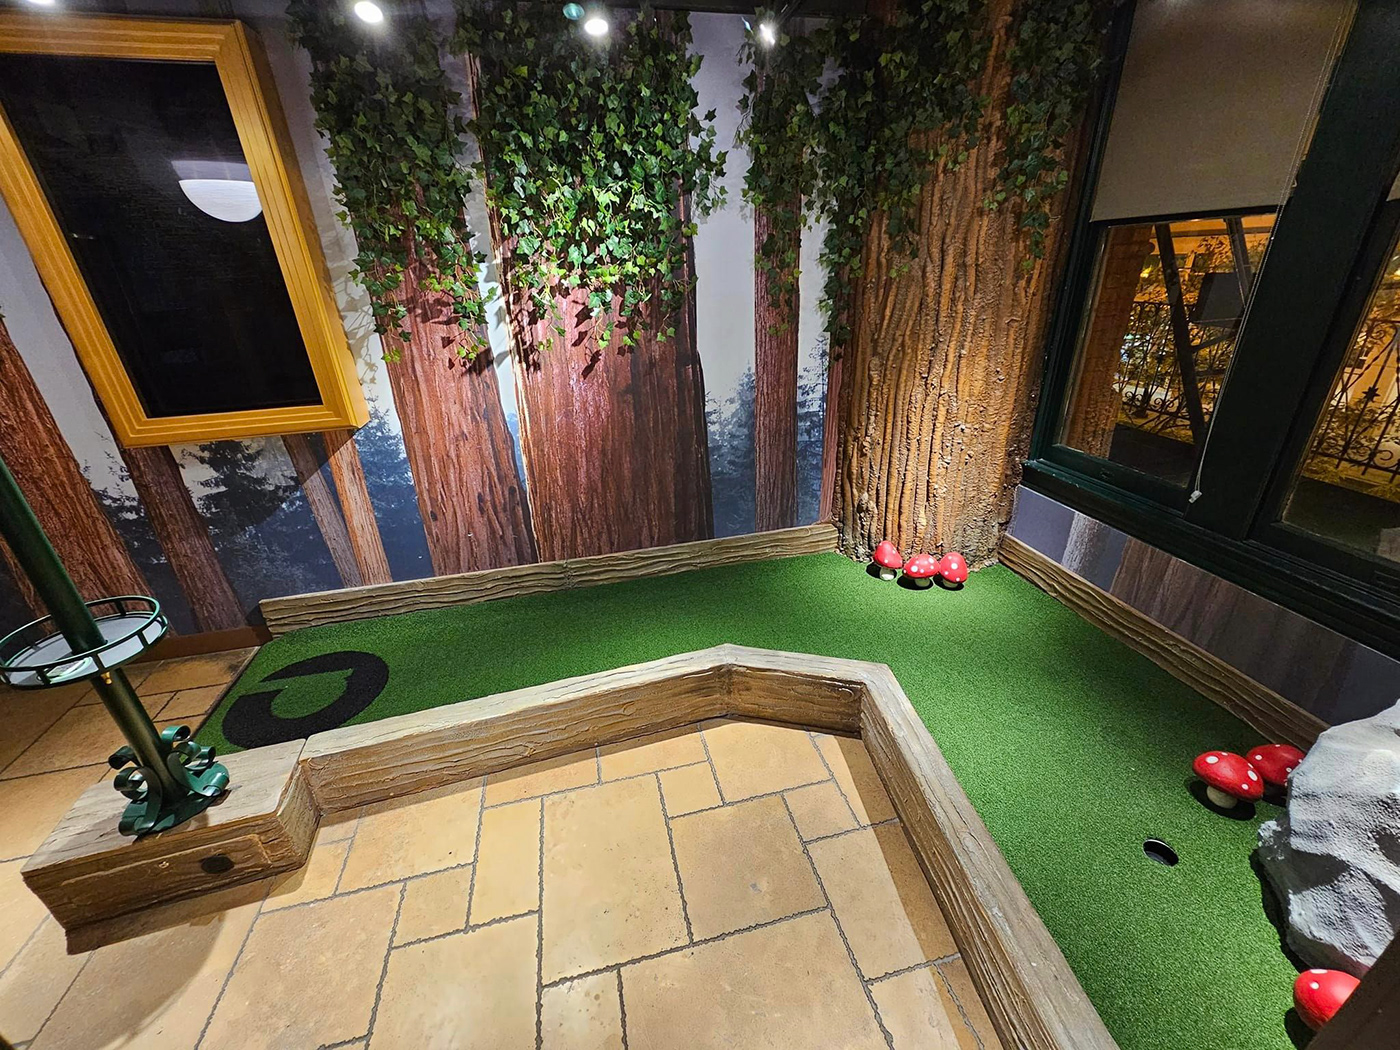 minigolf golf immersive themed environments props environment fantasy the puttery washington d.c.